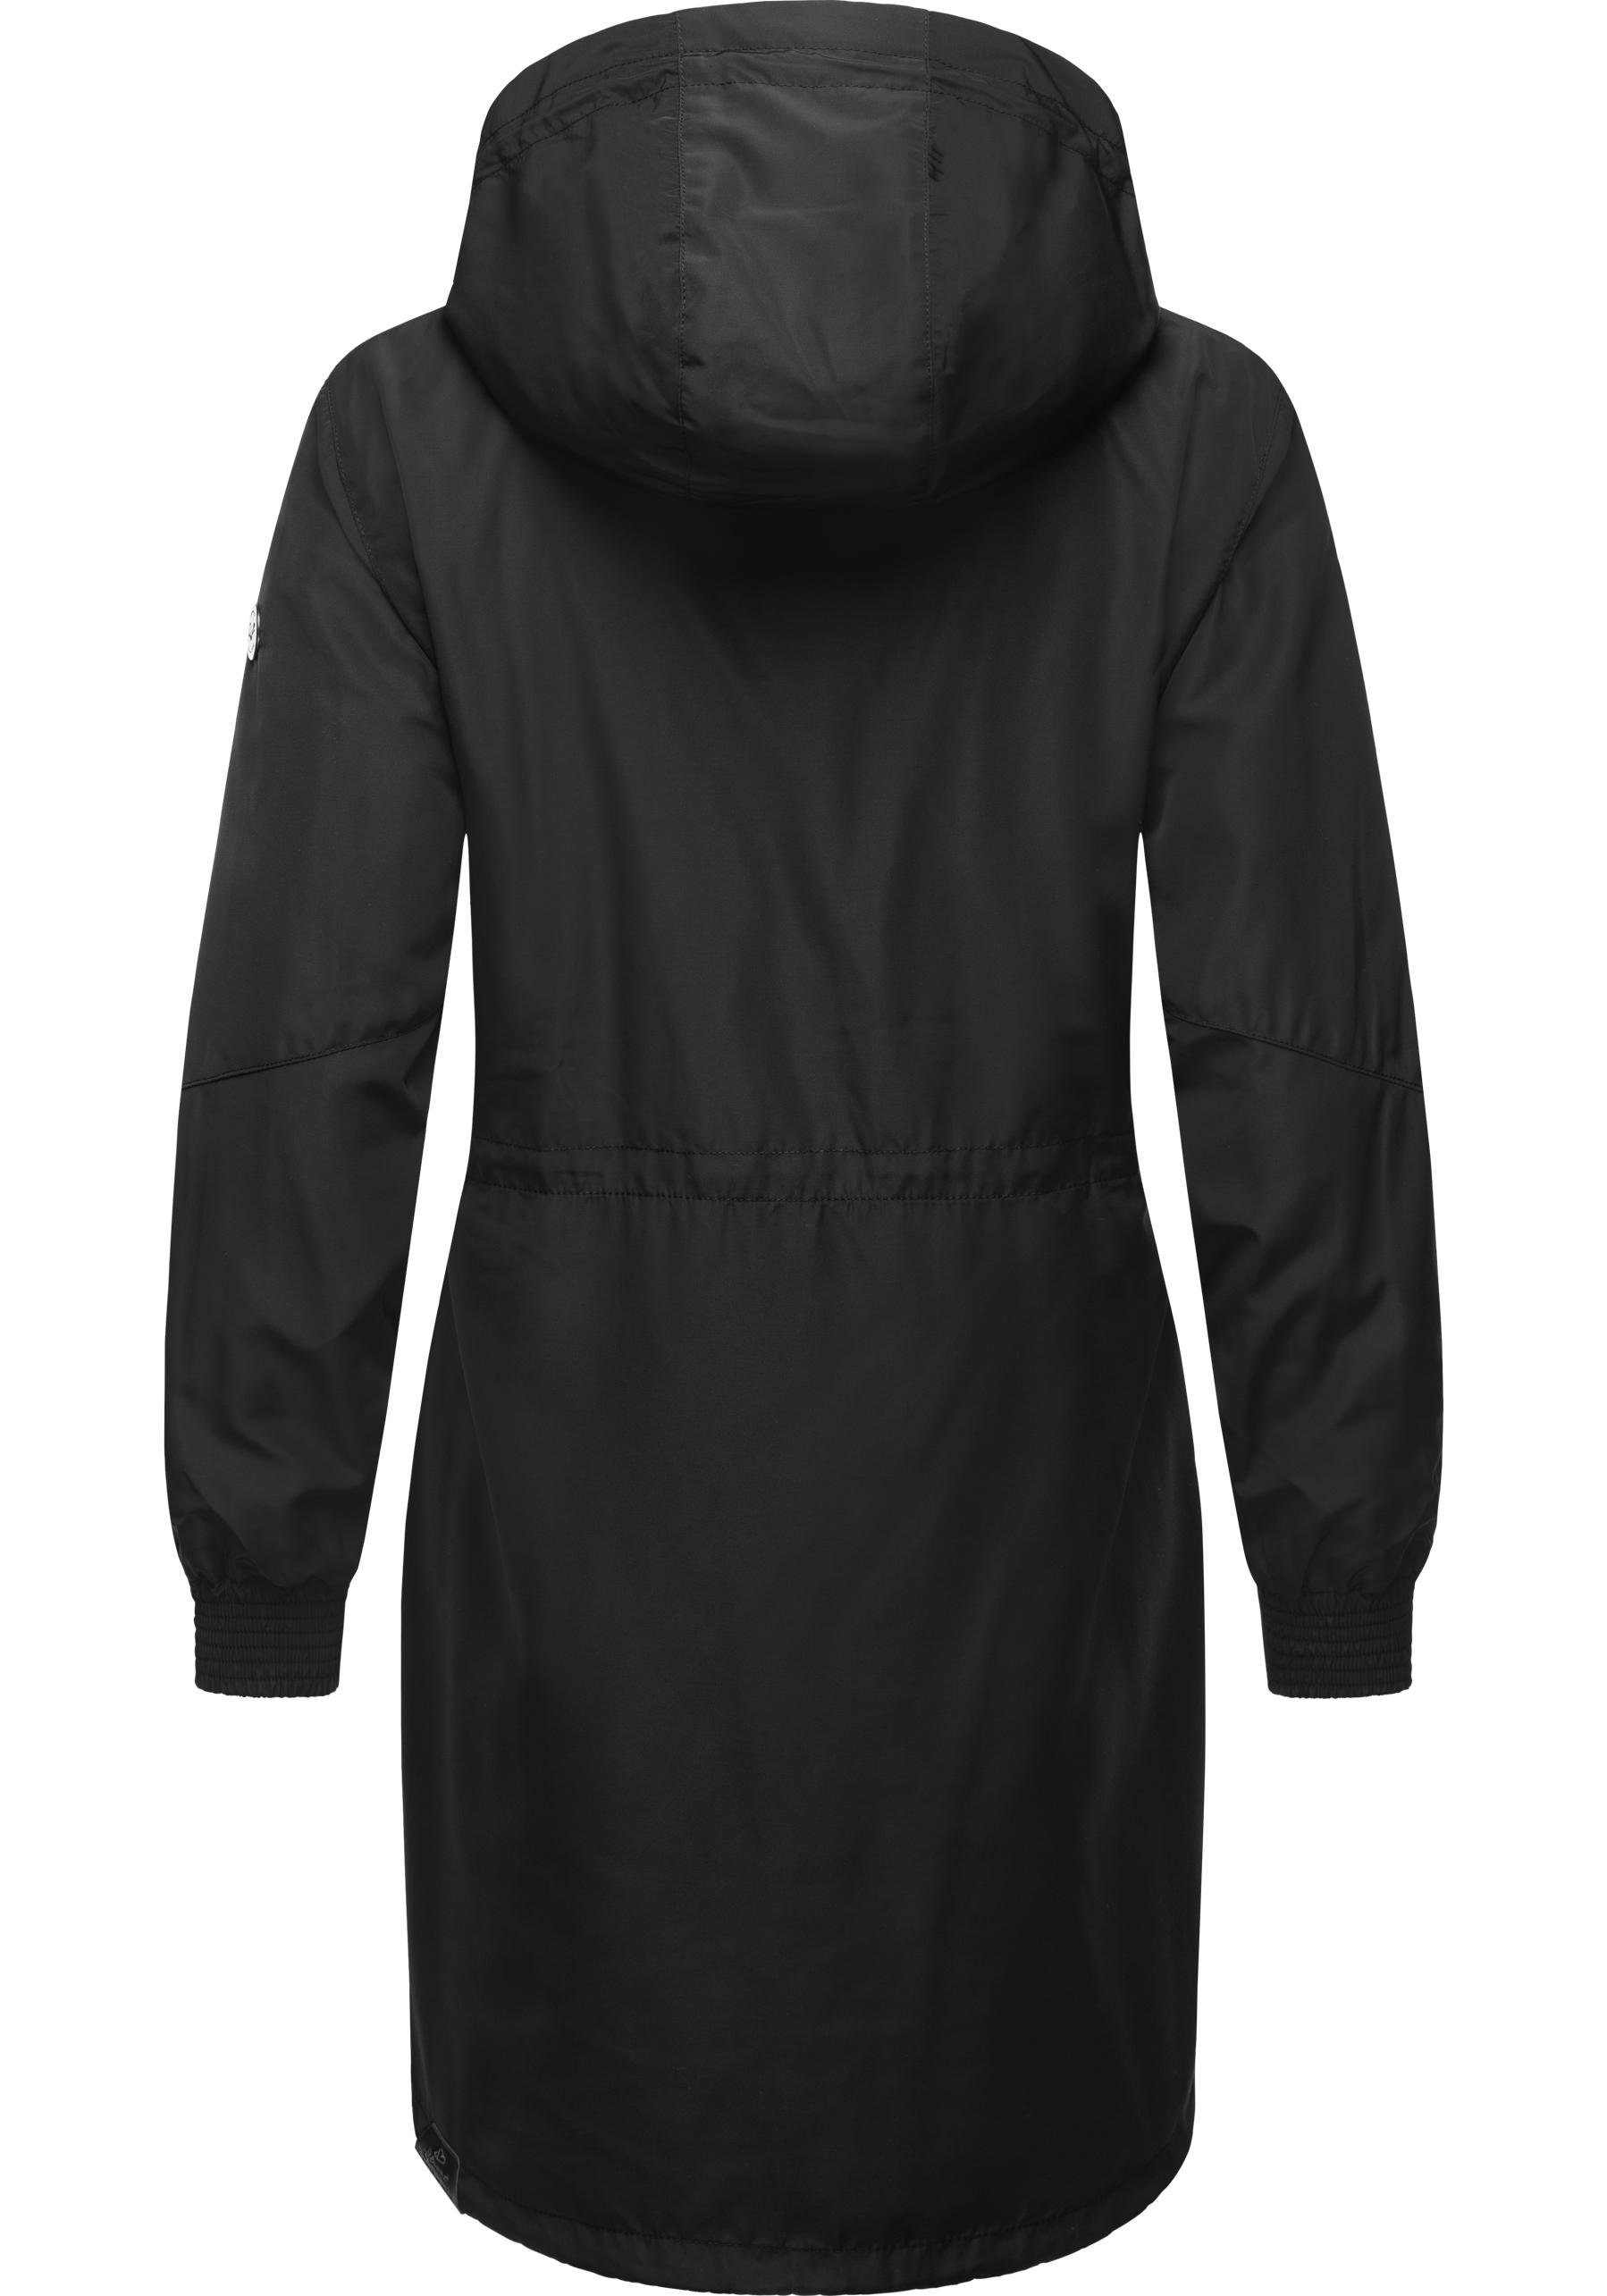 Ragwear Outdoorjacke Bronja stylischer unifarbener schwarz Übergangsmantel